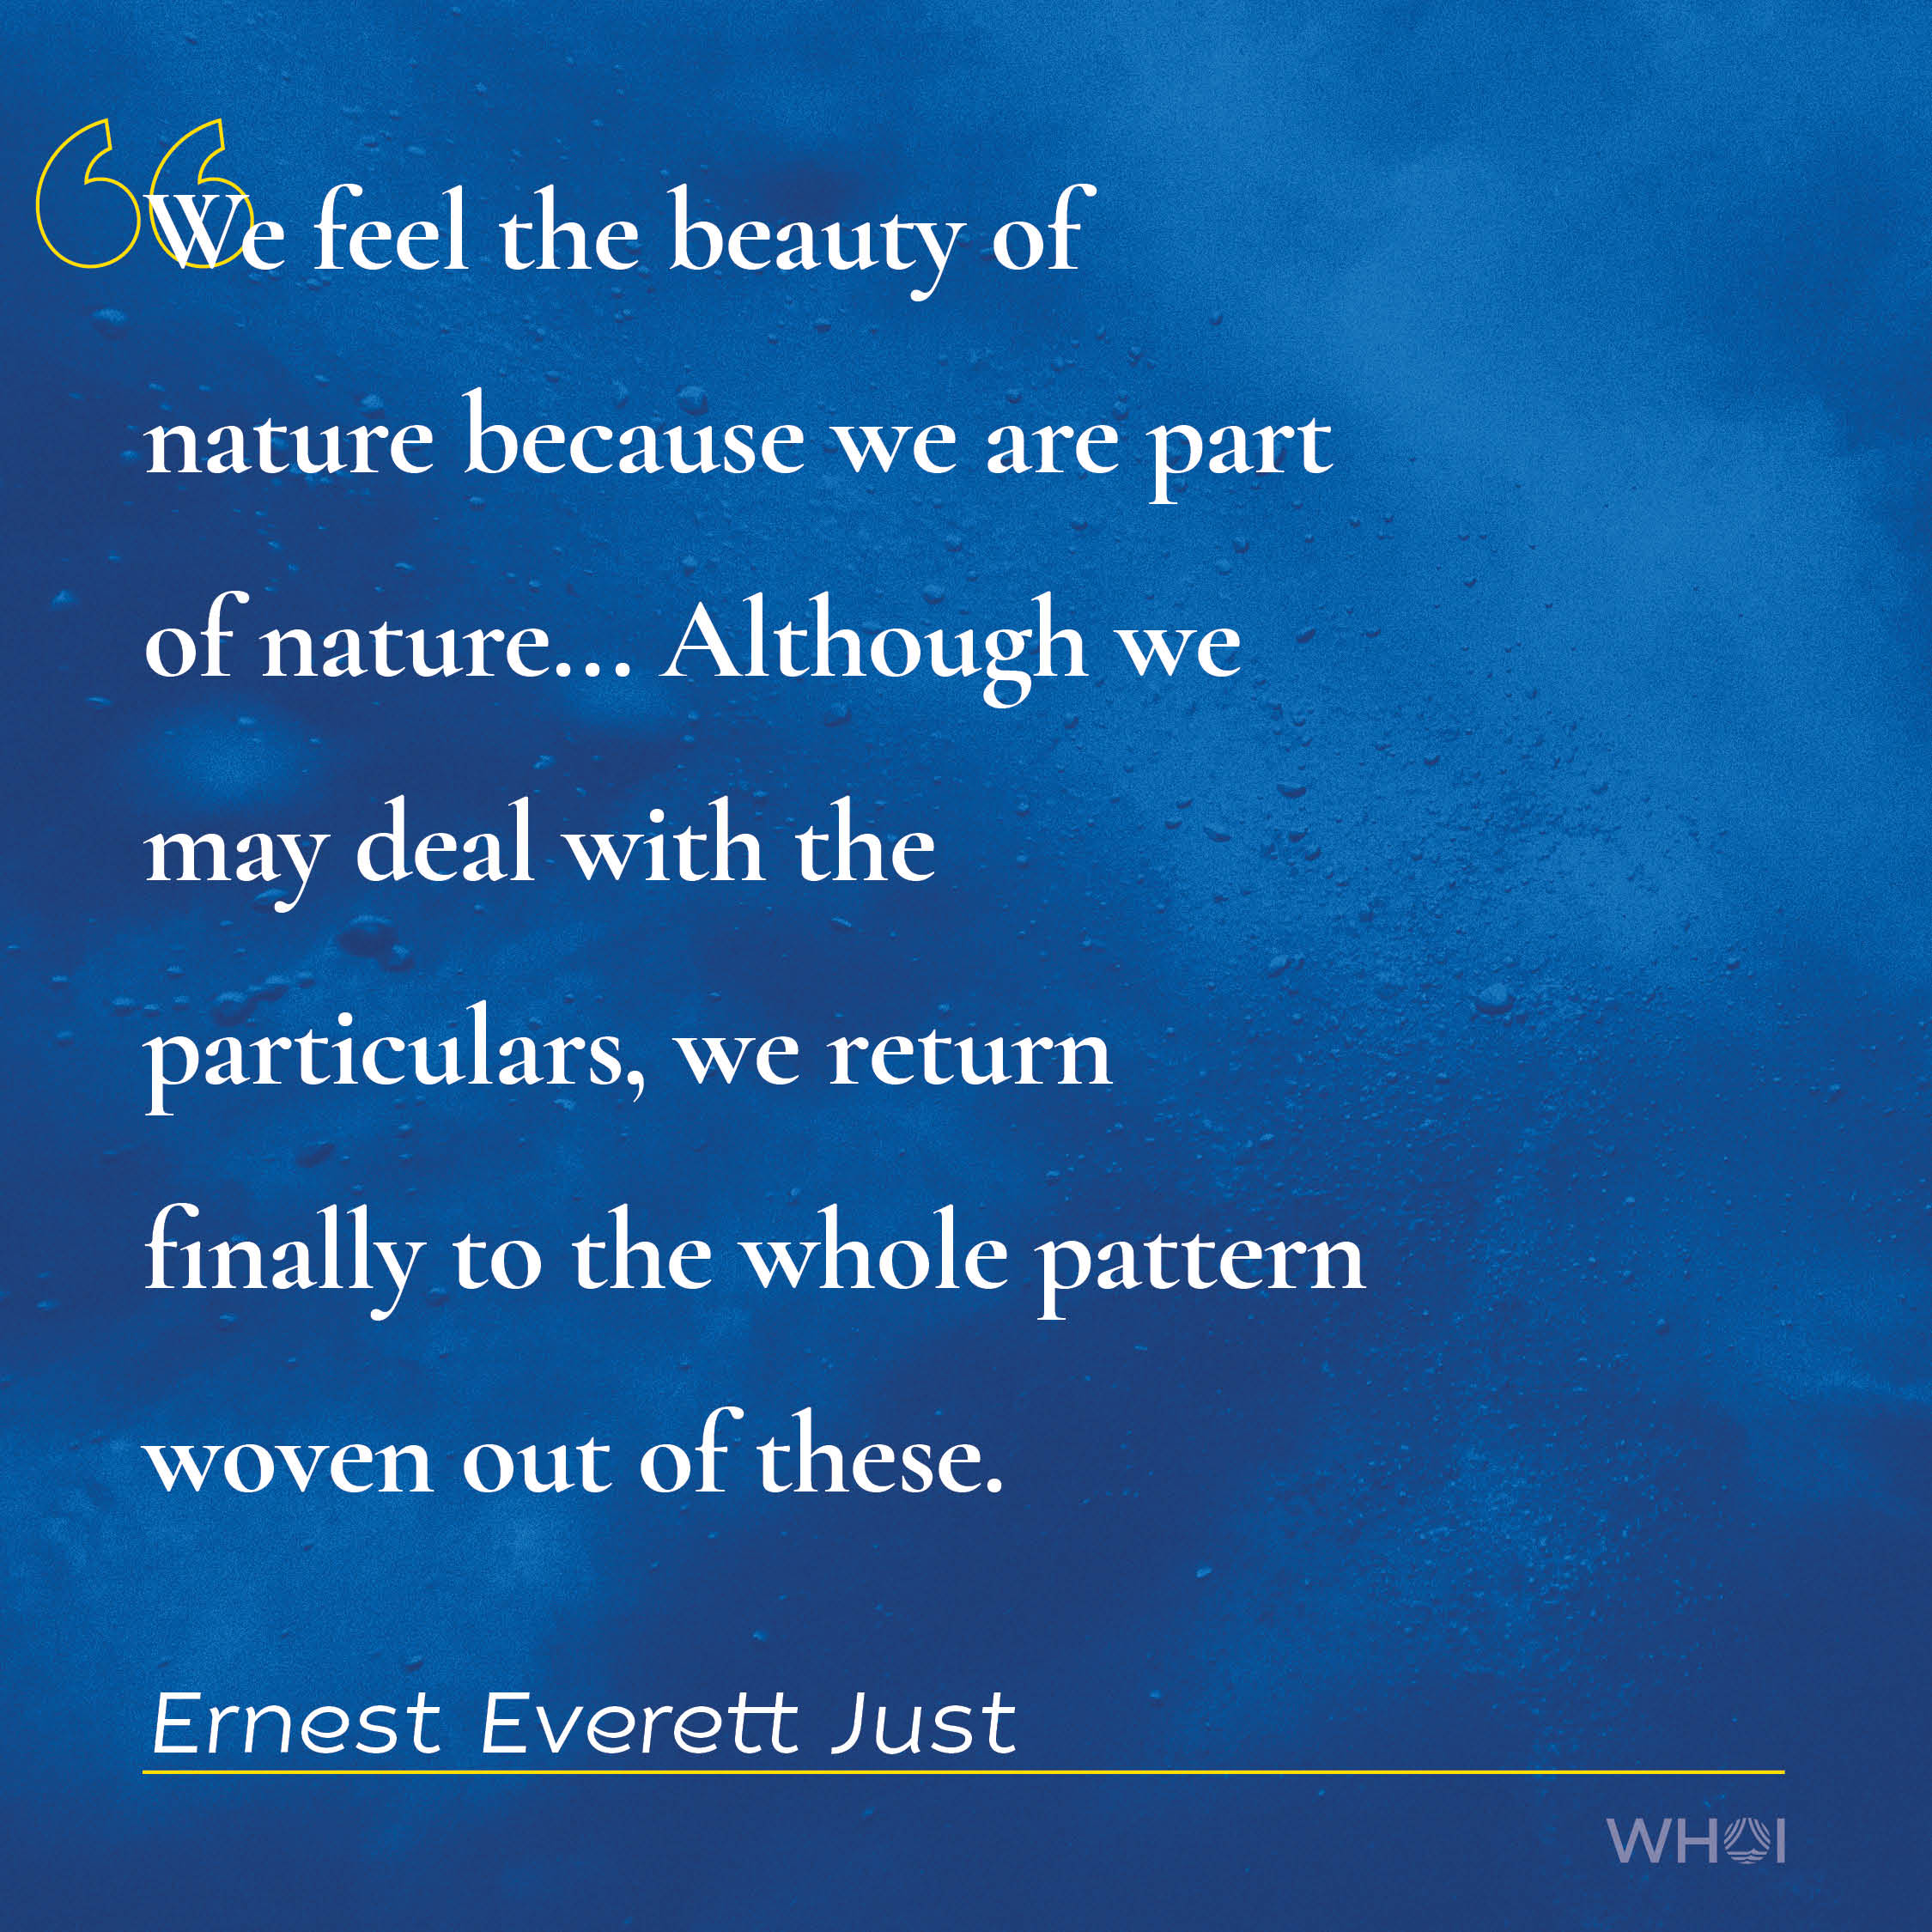 Ernest Everett Just Quote